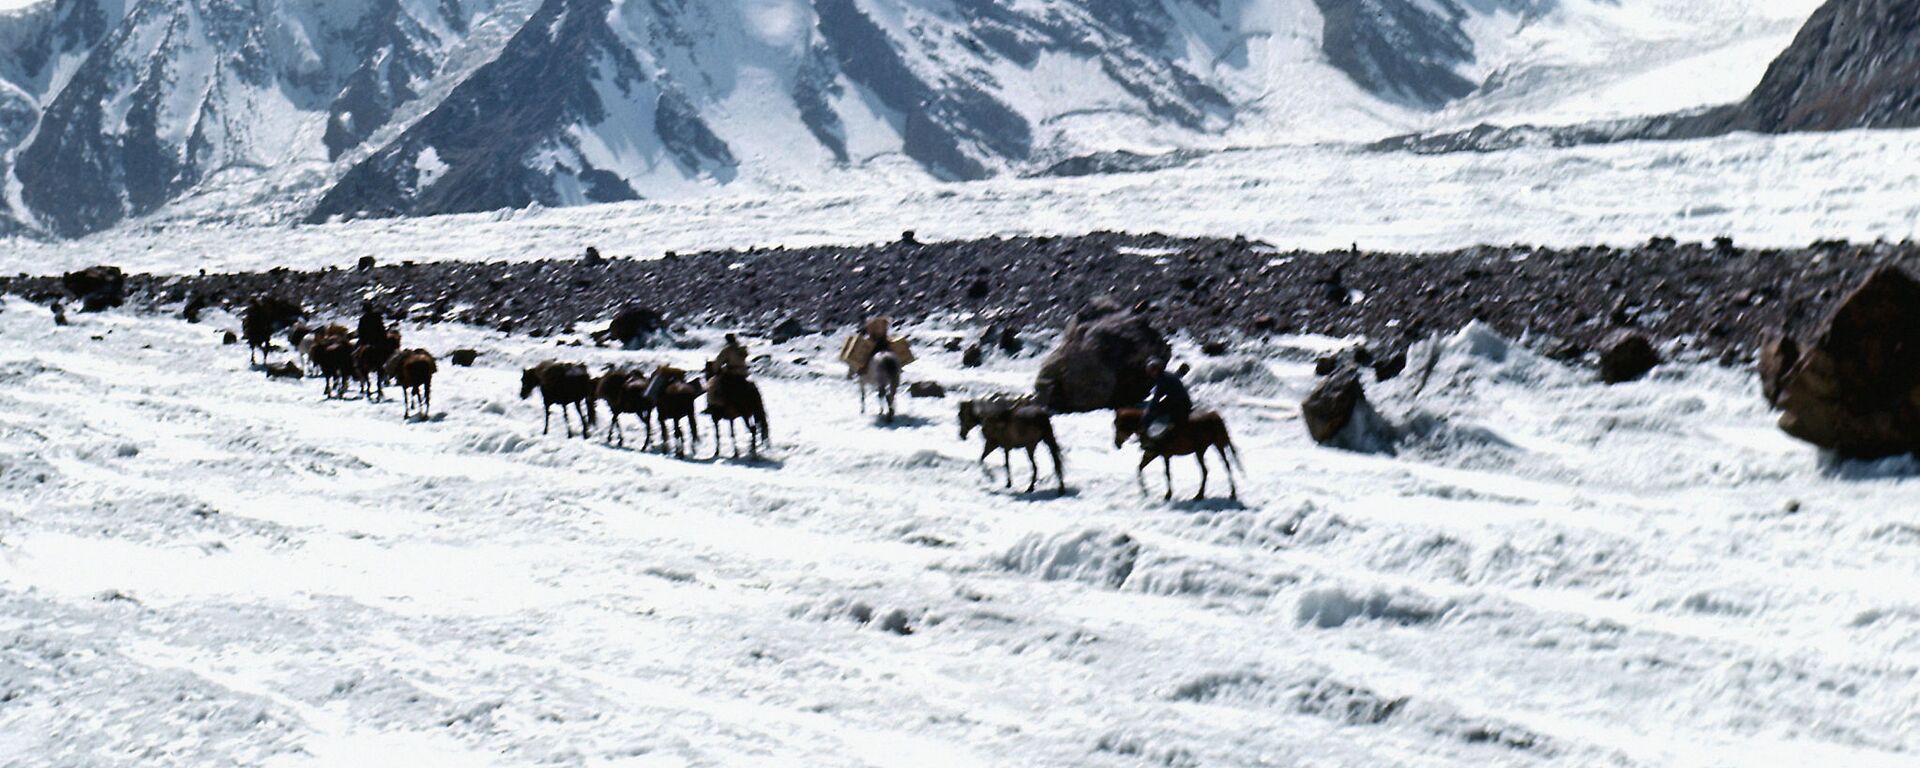 Ледник Федченко в горах Памир в Таджикистане. - Sputnik Таджикистан, 1920, 29.11.2021